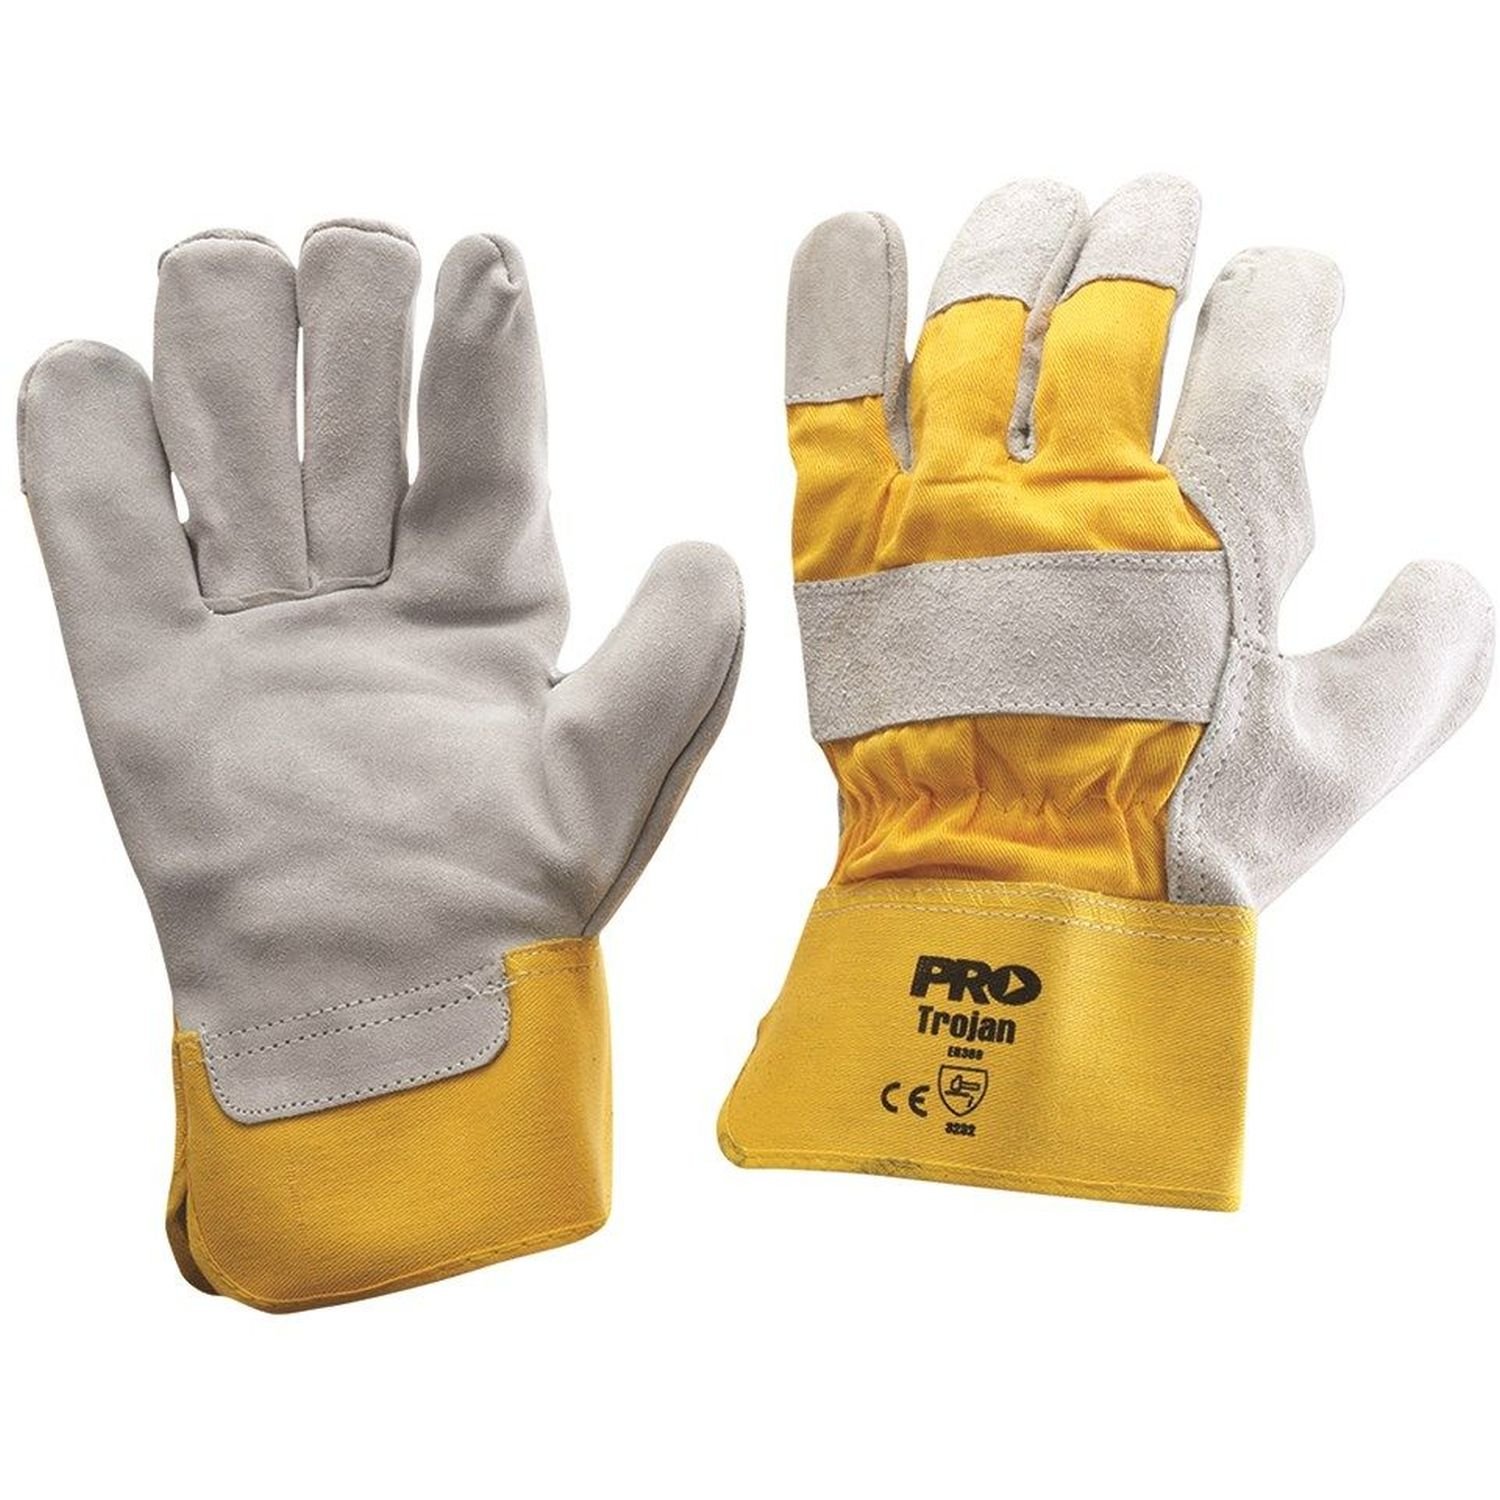 Handyman Gloves Yellow-Grey Pkt 12